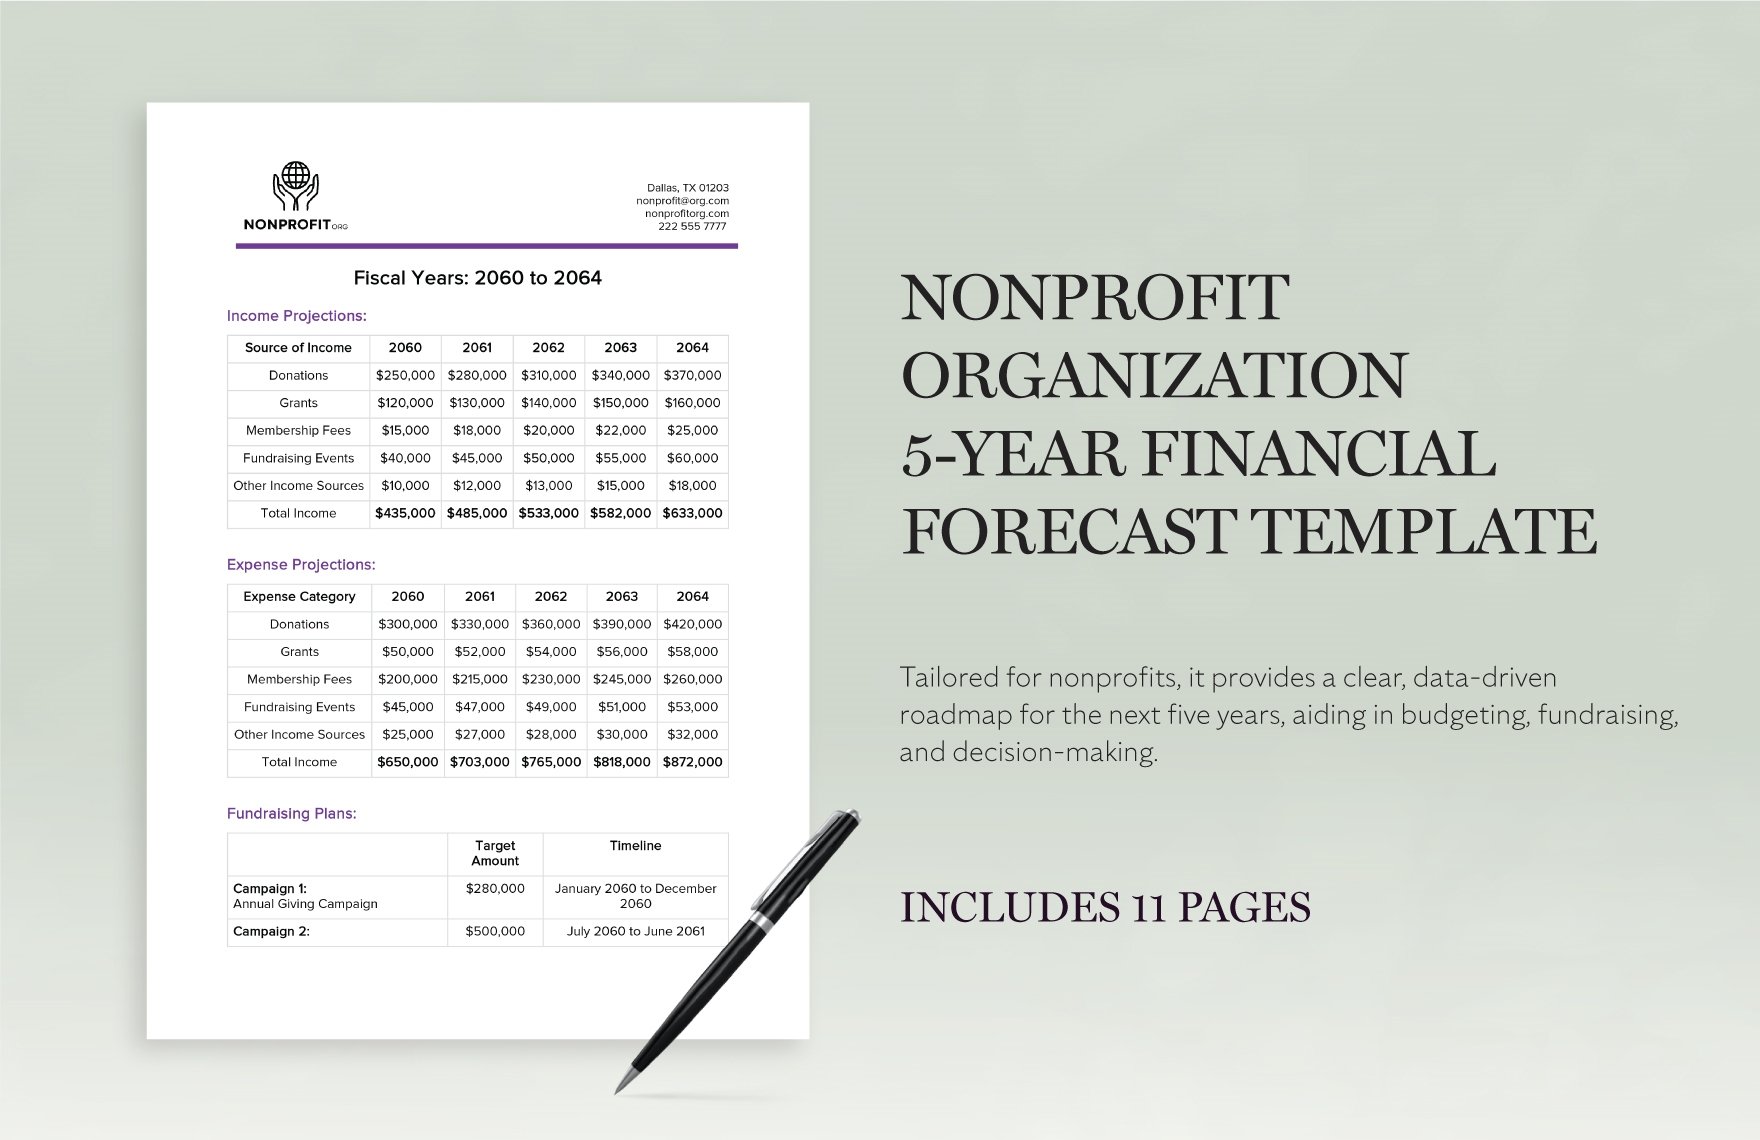 Nonprofit Organization 5-Year Financial Forecast Template